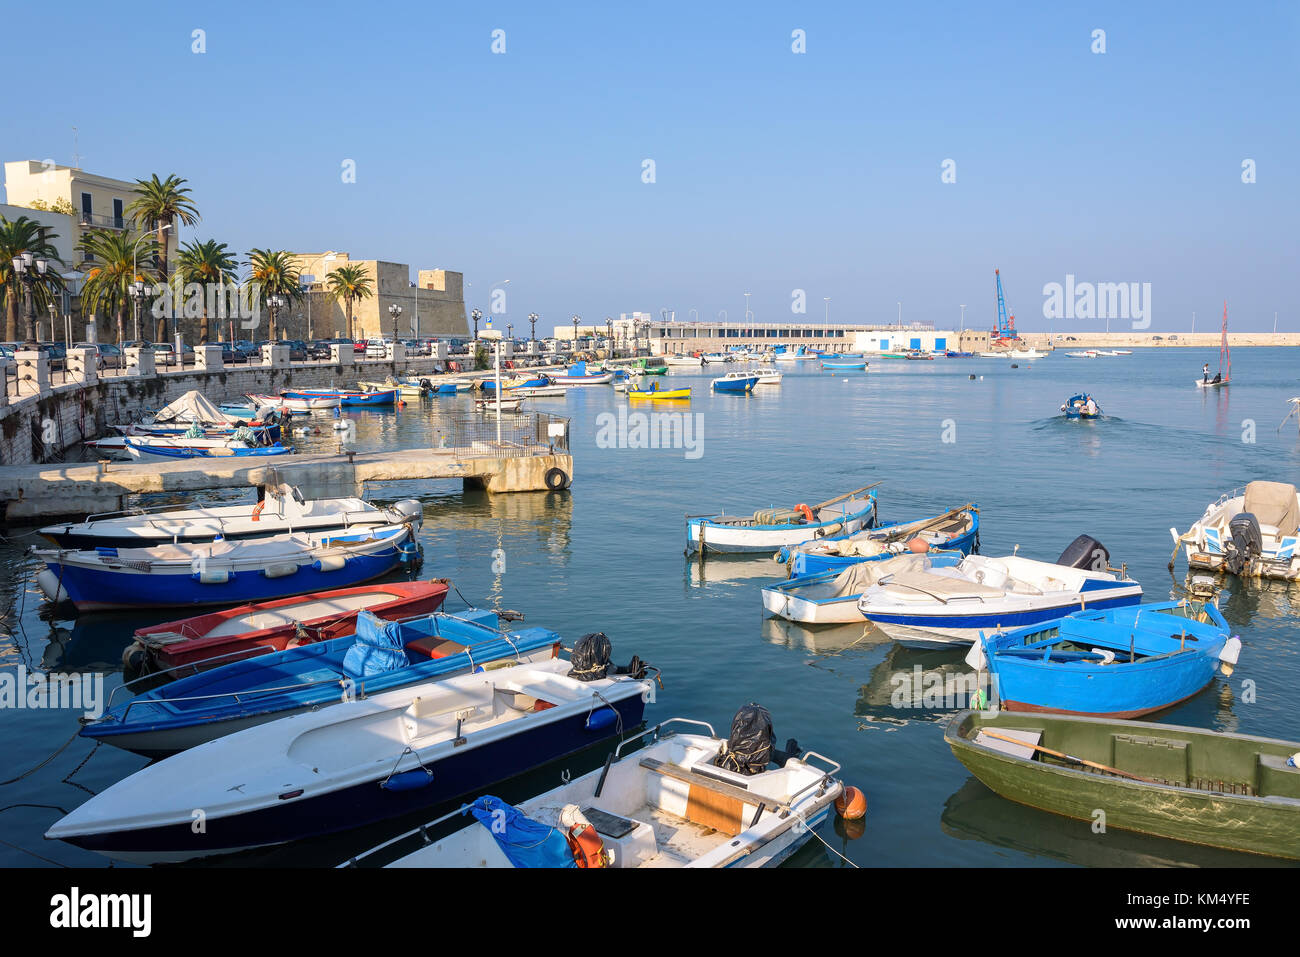 View of the port of Bari, Apulia, Italy Stock Photo - Alamy